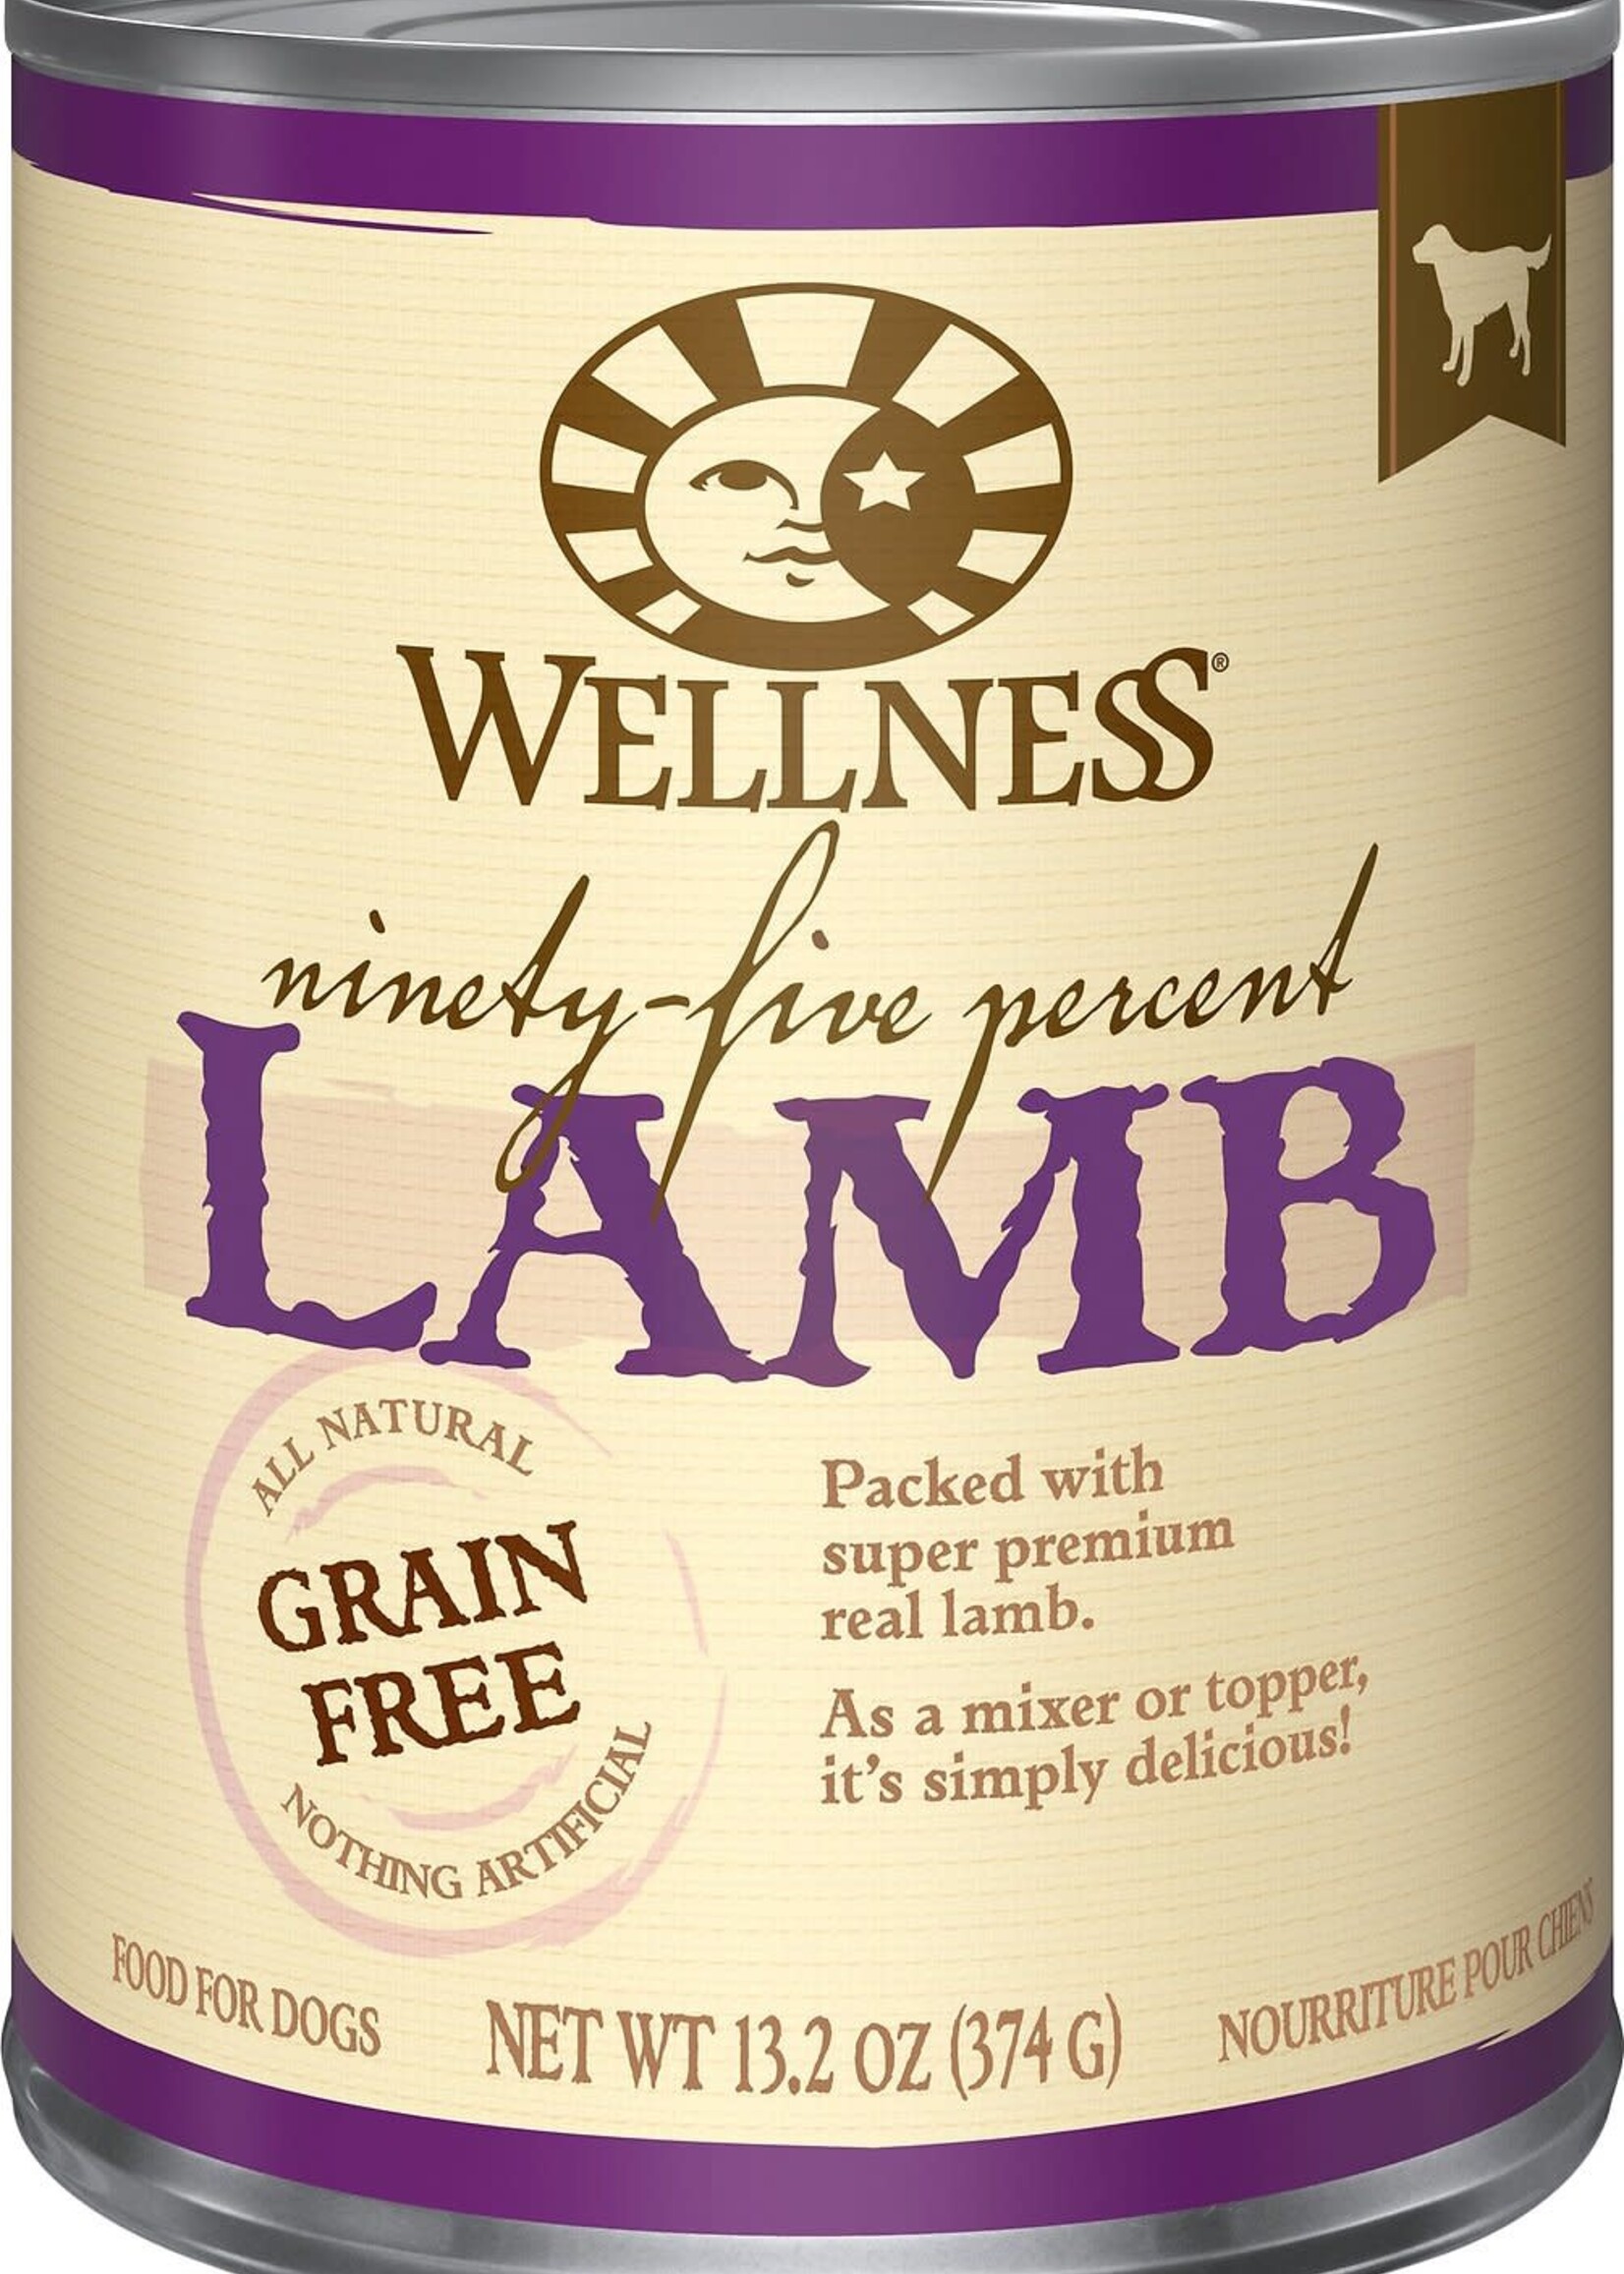 Wellness Wellness Ninety-Five Percent Lamb Mixer or Topper Wet Canned Dog Food 13.2-oz